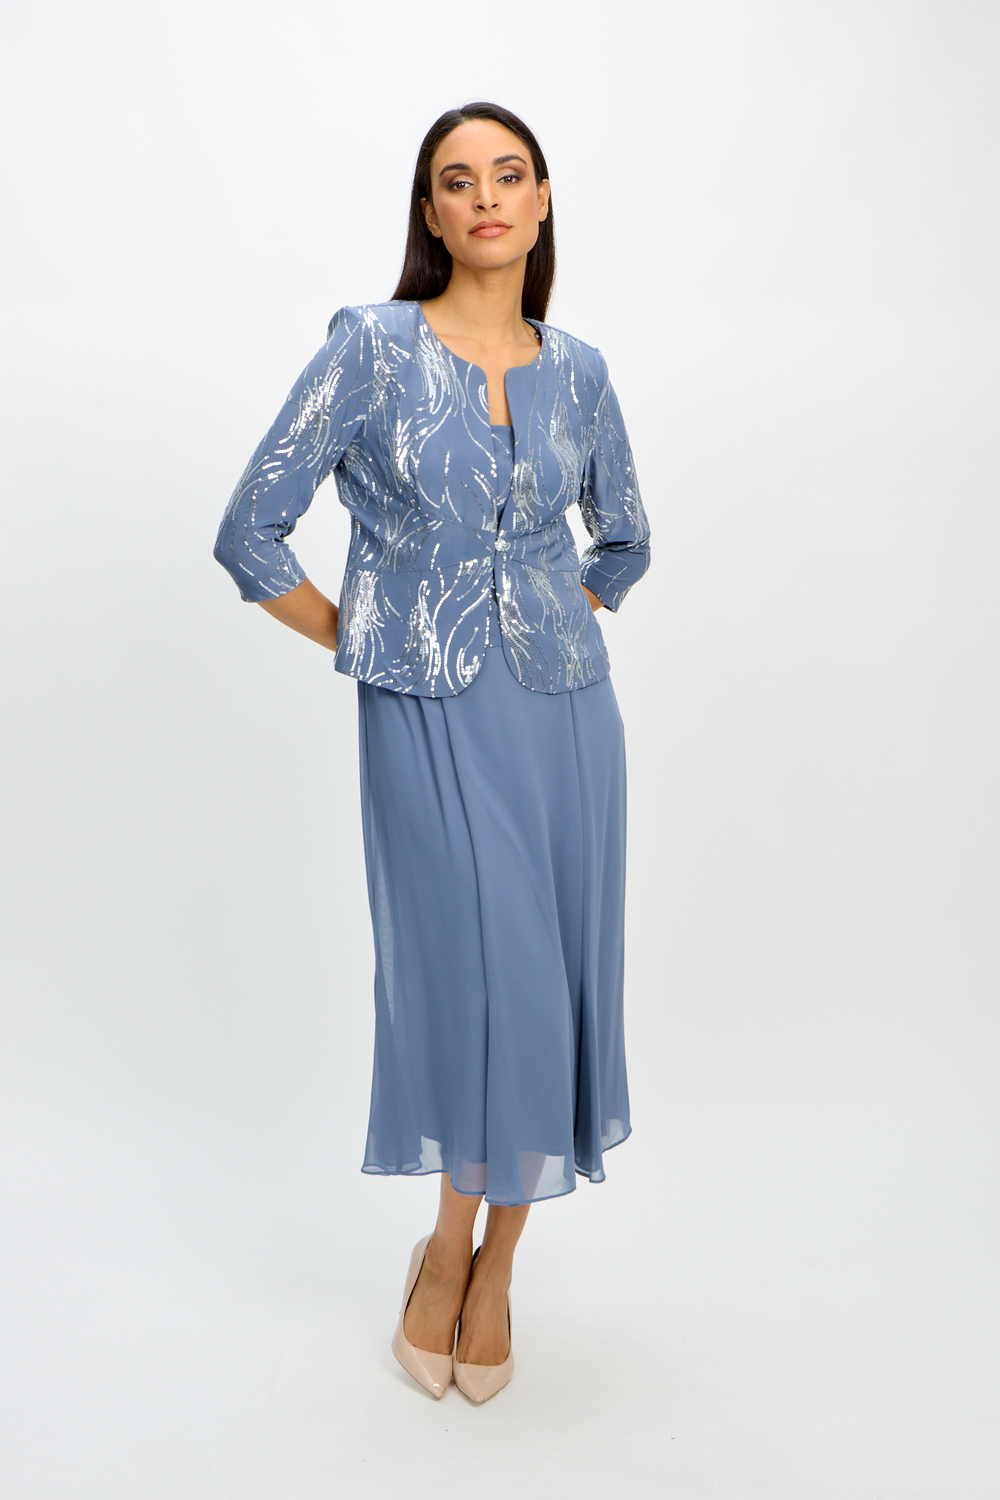 Tea Length Jacket Dress Style 196267. Steel Blue